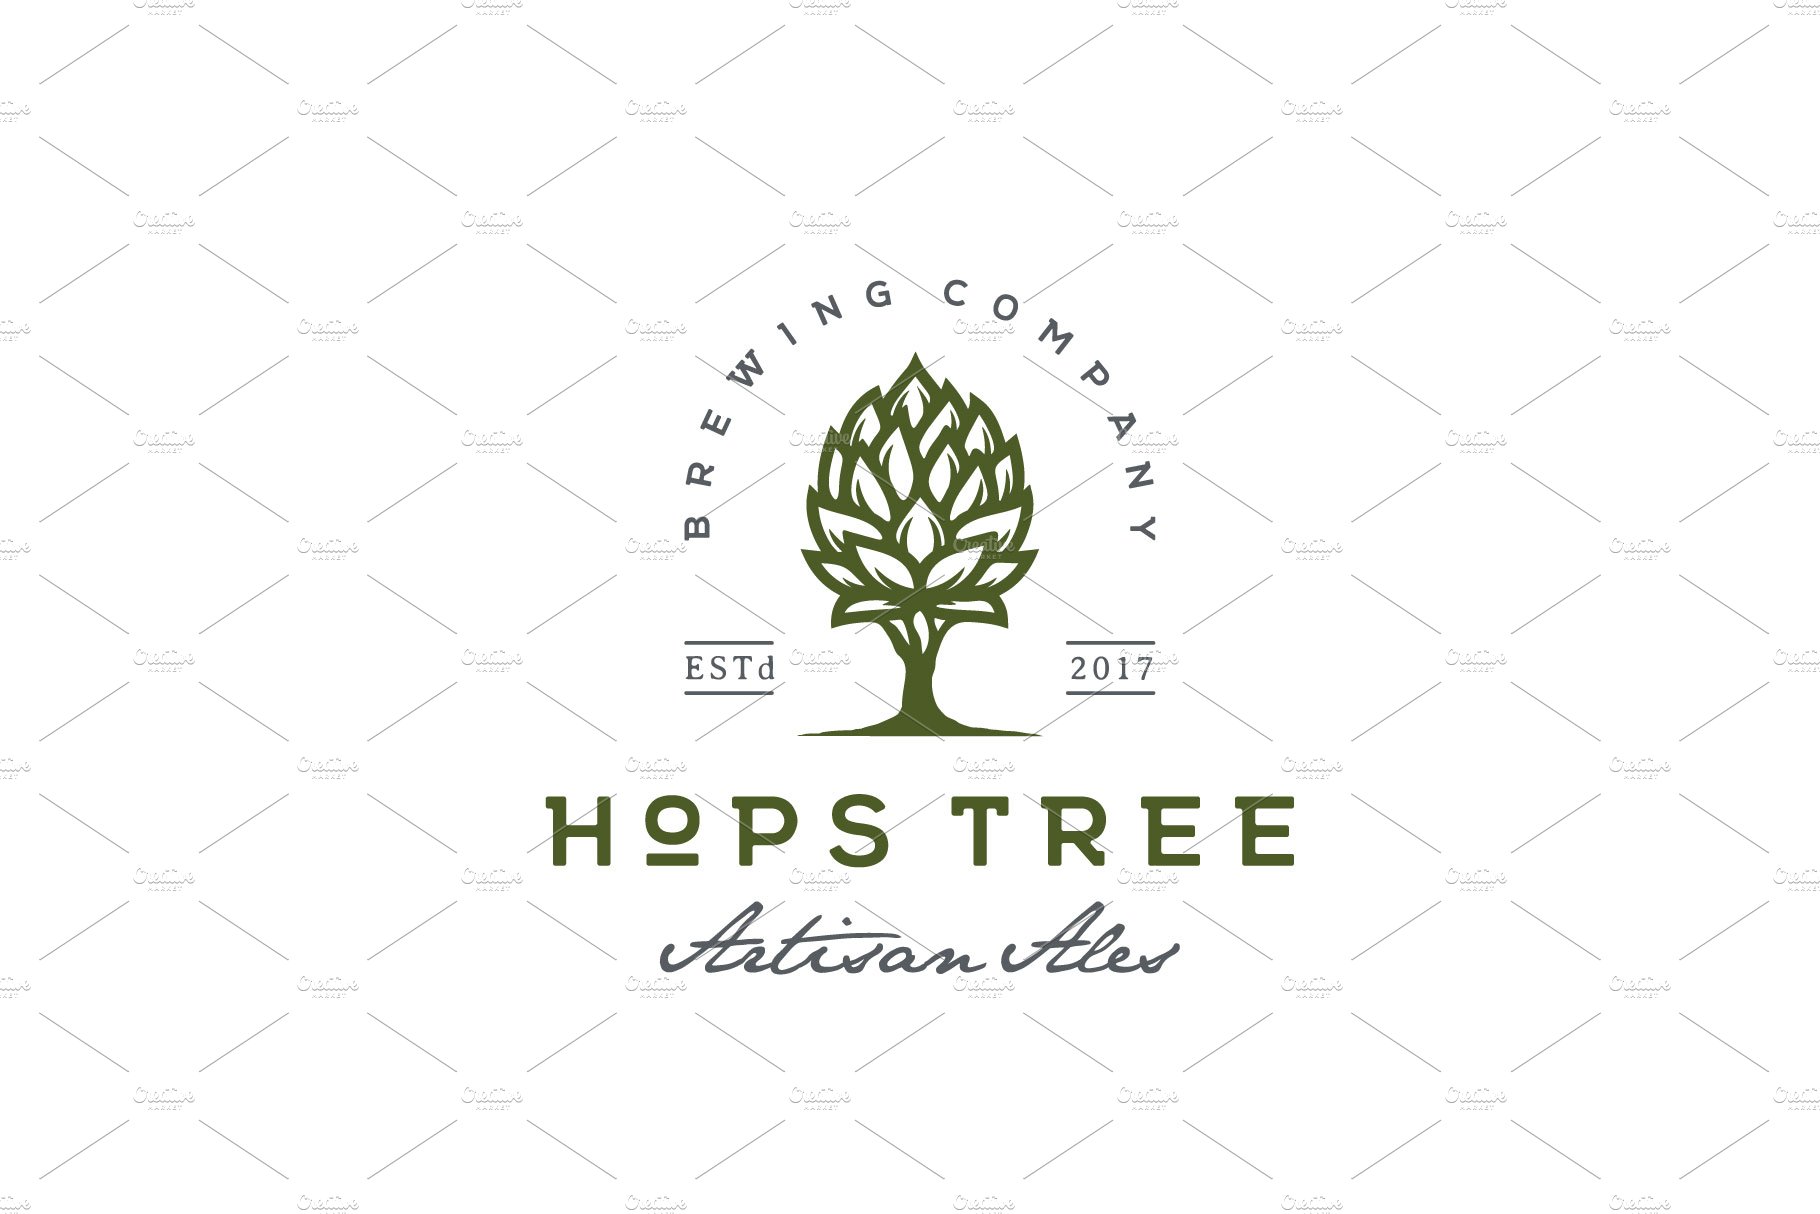 Hops Tree Vintage Beer Brewery Logo cover image.